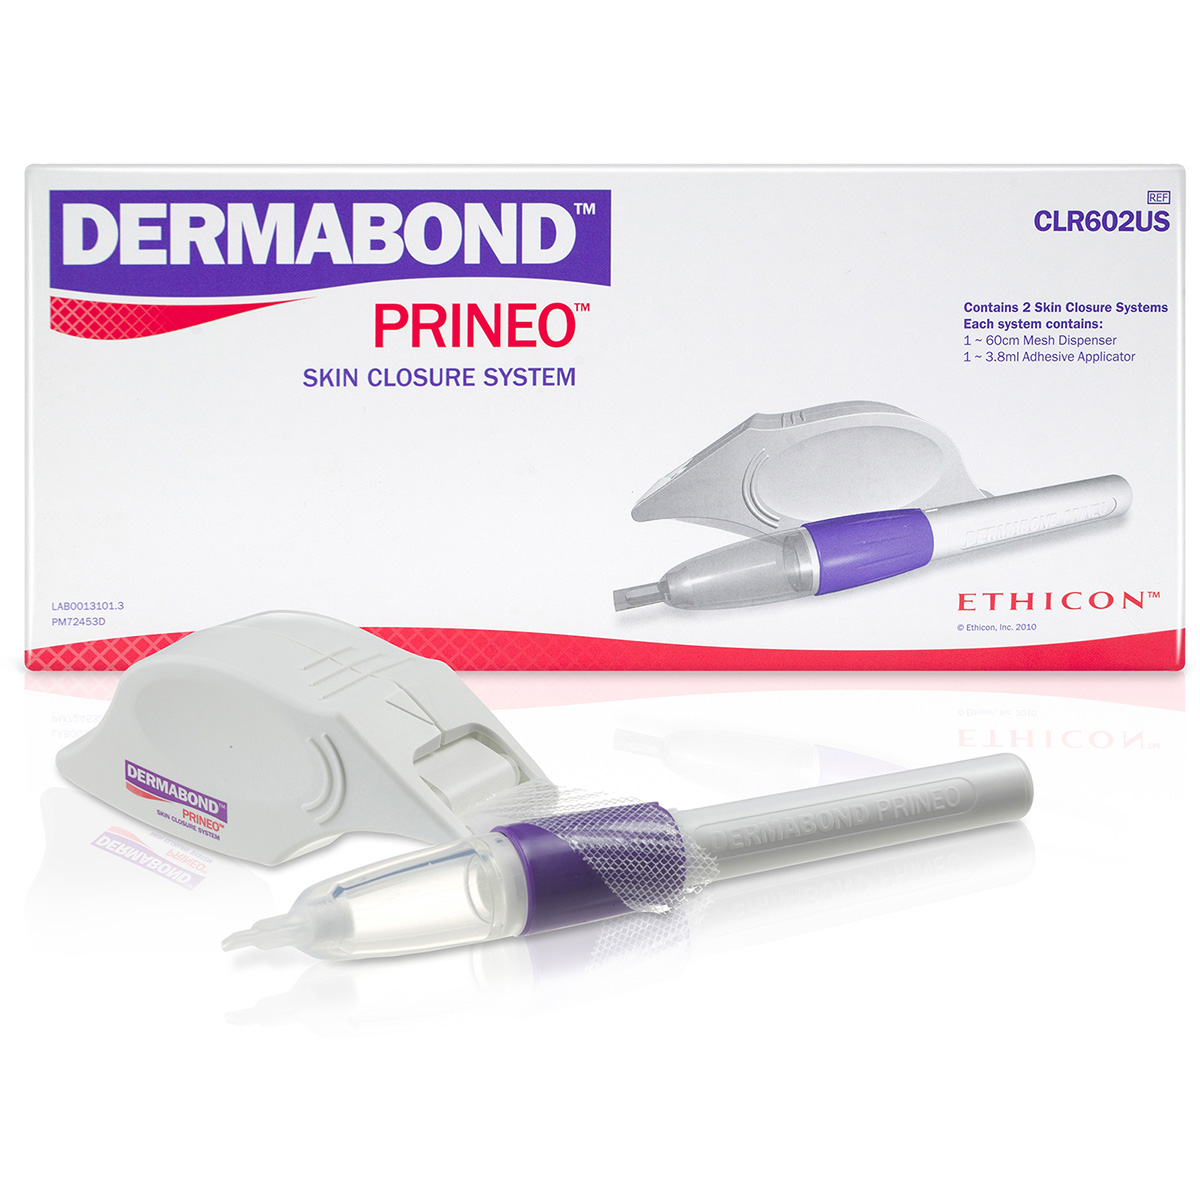  Ethicon DERMABOND PRINEO Skin Closure System (60 cm